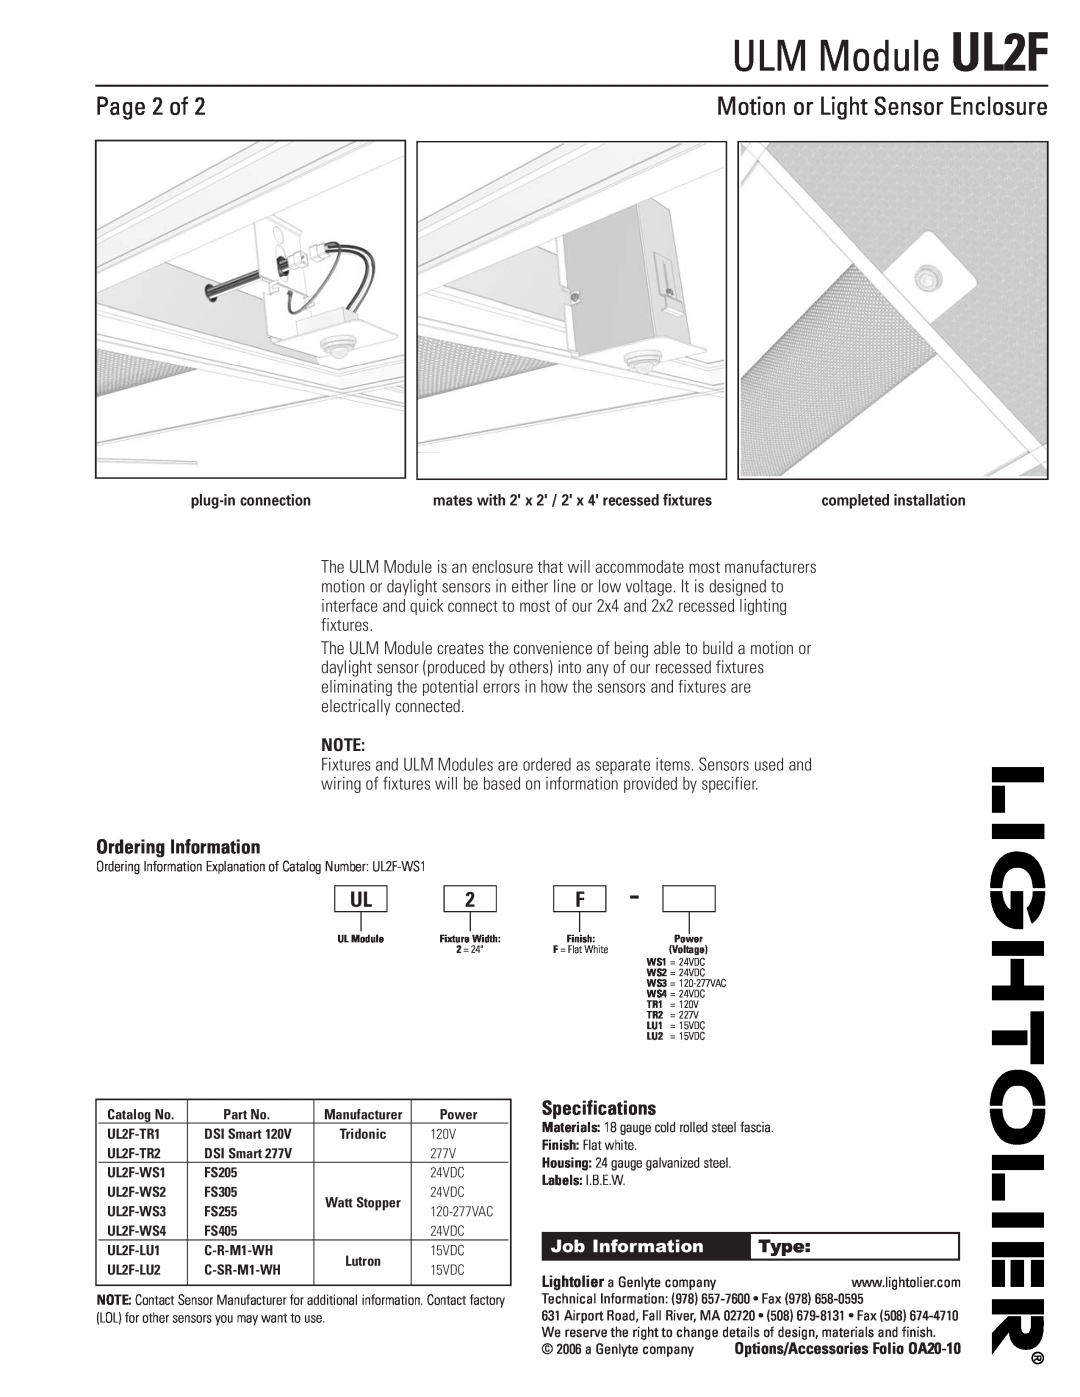 Lightolier OA20-10 Page 2 of, Ordering Information, Specifications, ULM Module UL2F, Motion or Light Sensor Enclosure 